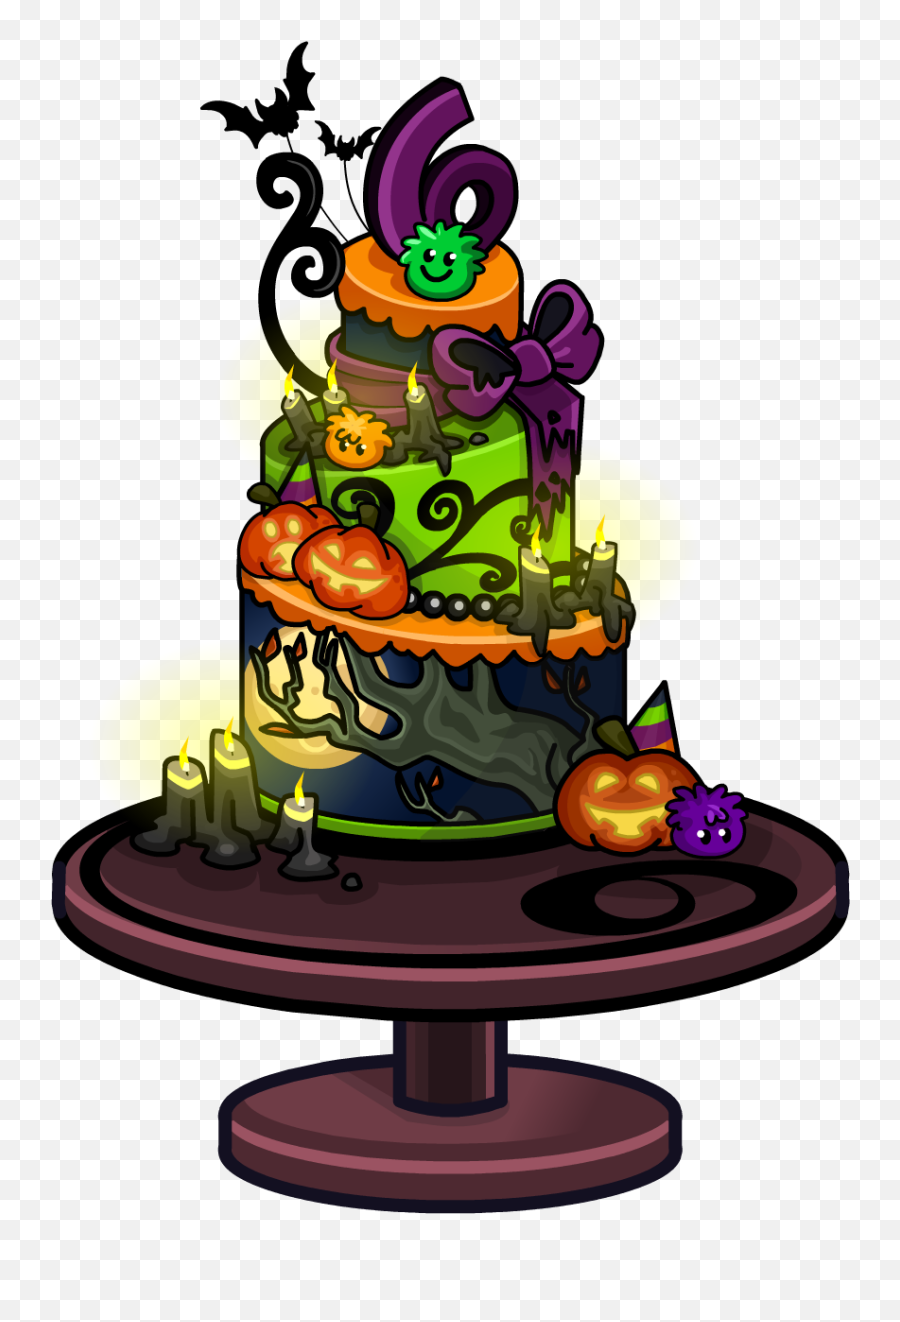 6th Anniversary Party Cake - Club Penguin 6th Anniversary Cake Images Download Of Anniversary Png,Club Penguin Logo